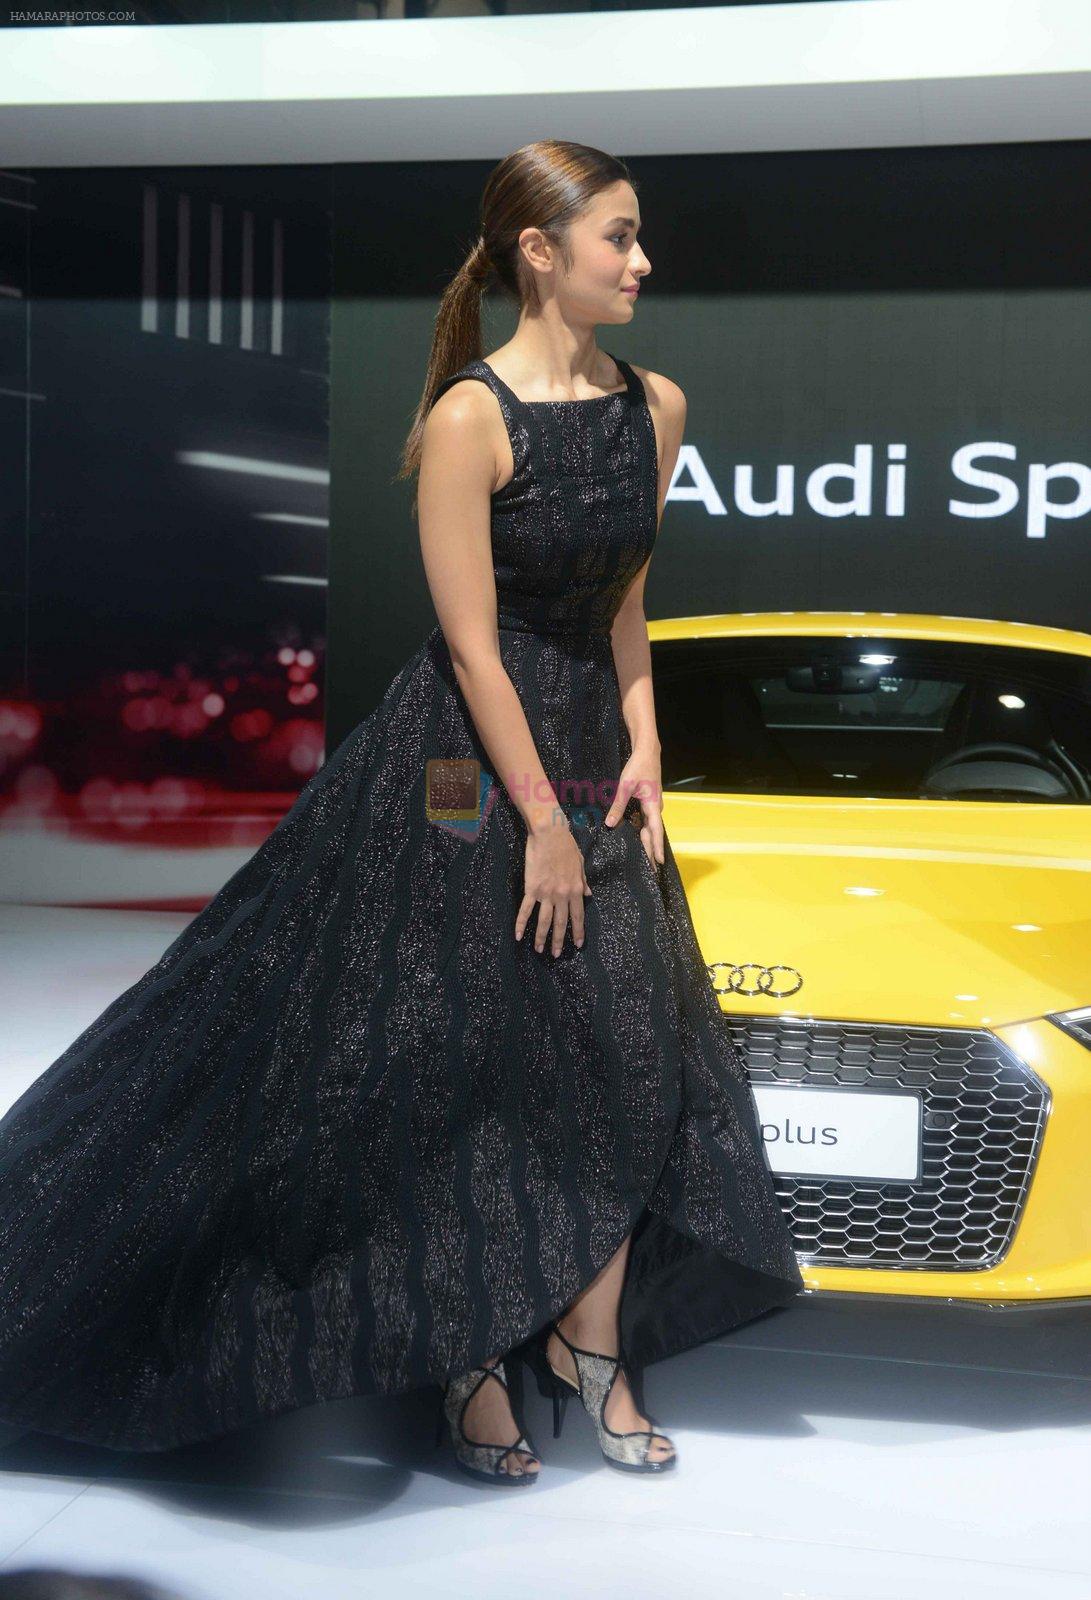 Alia Bhatt unveil the new Audi R8 at Auto Expo 2016 on 3rd Feb 2016